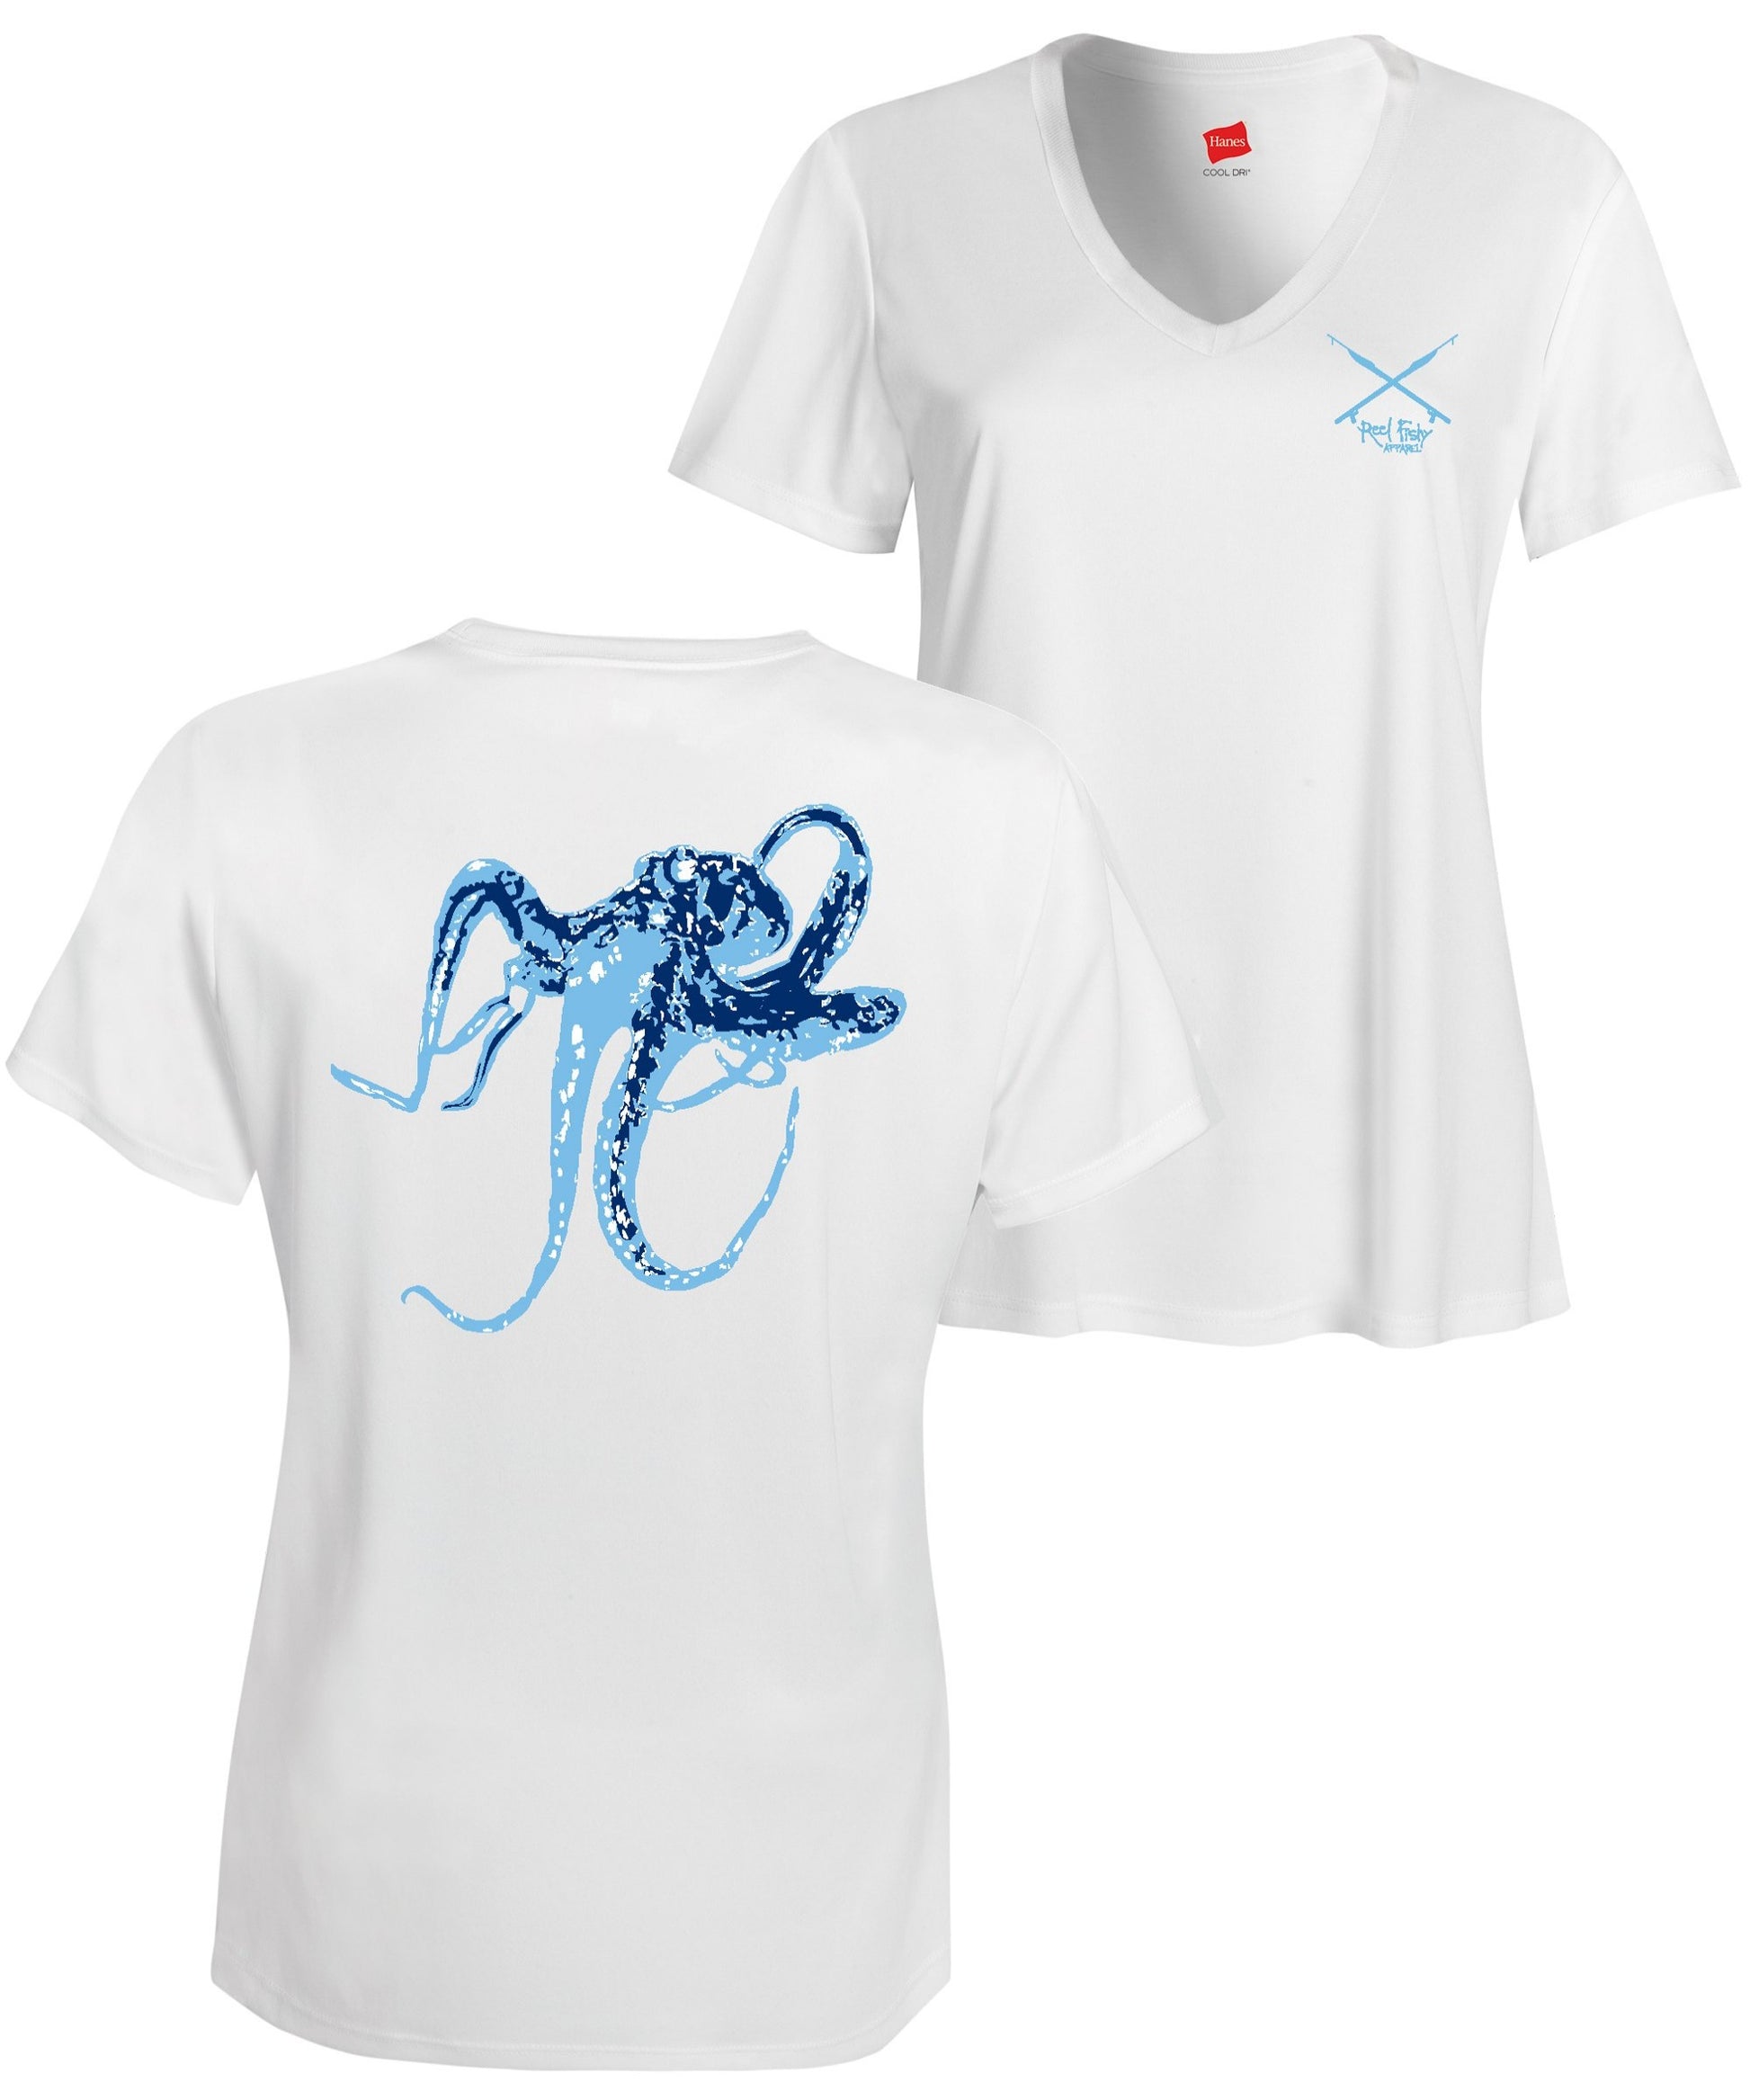 Women's Octopus Performance Dry-Fit Fishing 50+UV Sun Protection V-neck  Shirts - Reel Fishy Apparel